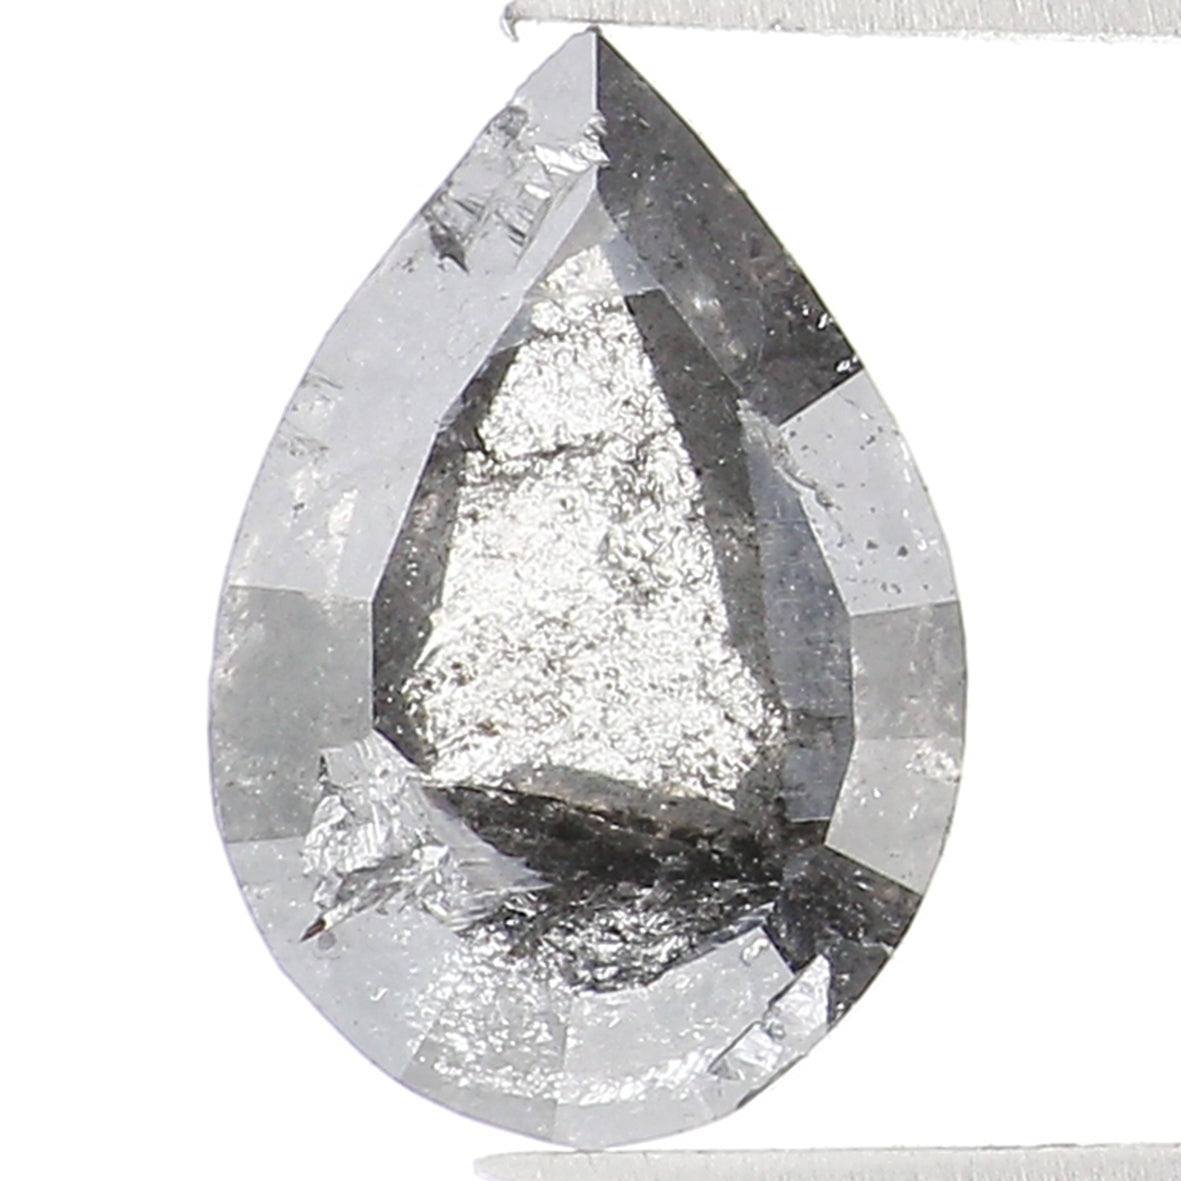 0.55 CT Natural Loose Pear Shape Diamond Salt And Pepper Pear Rose Cut Diamond 6.60 MM Black Grey Color Pear Shape Rose Cut Diamond QL1065